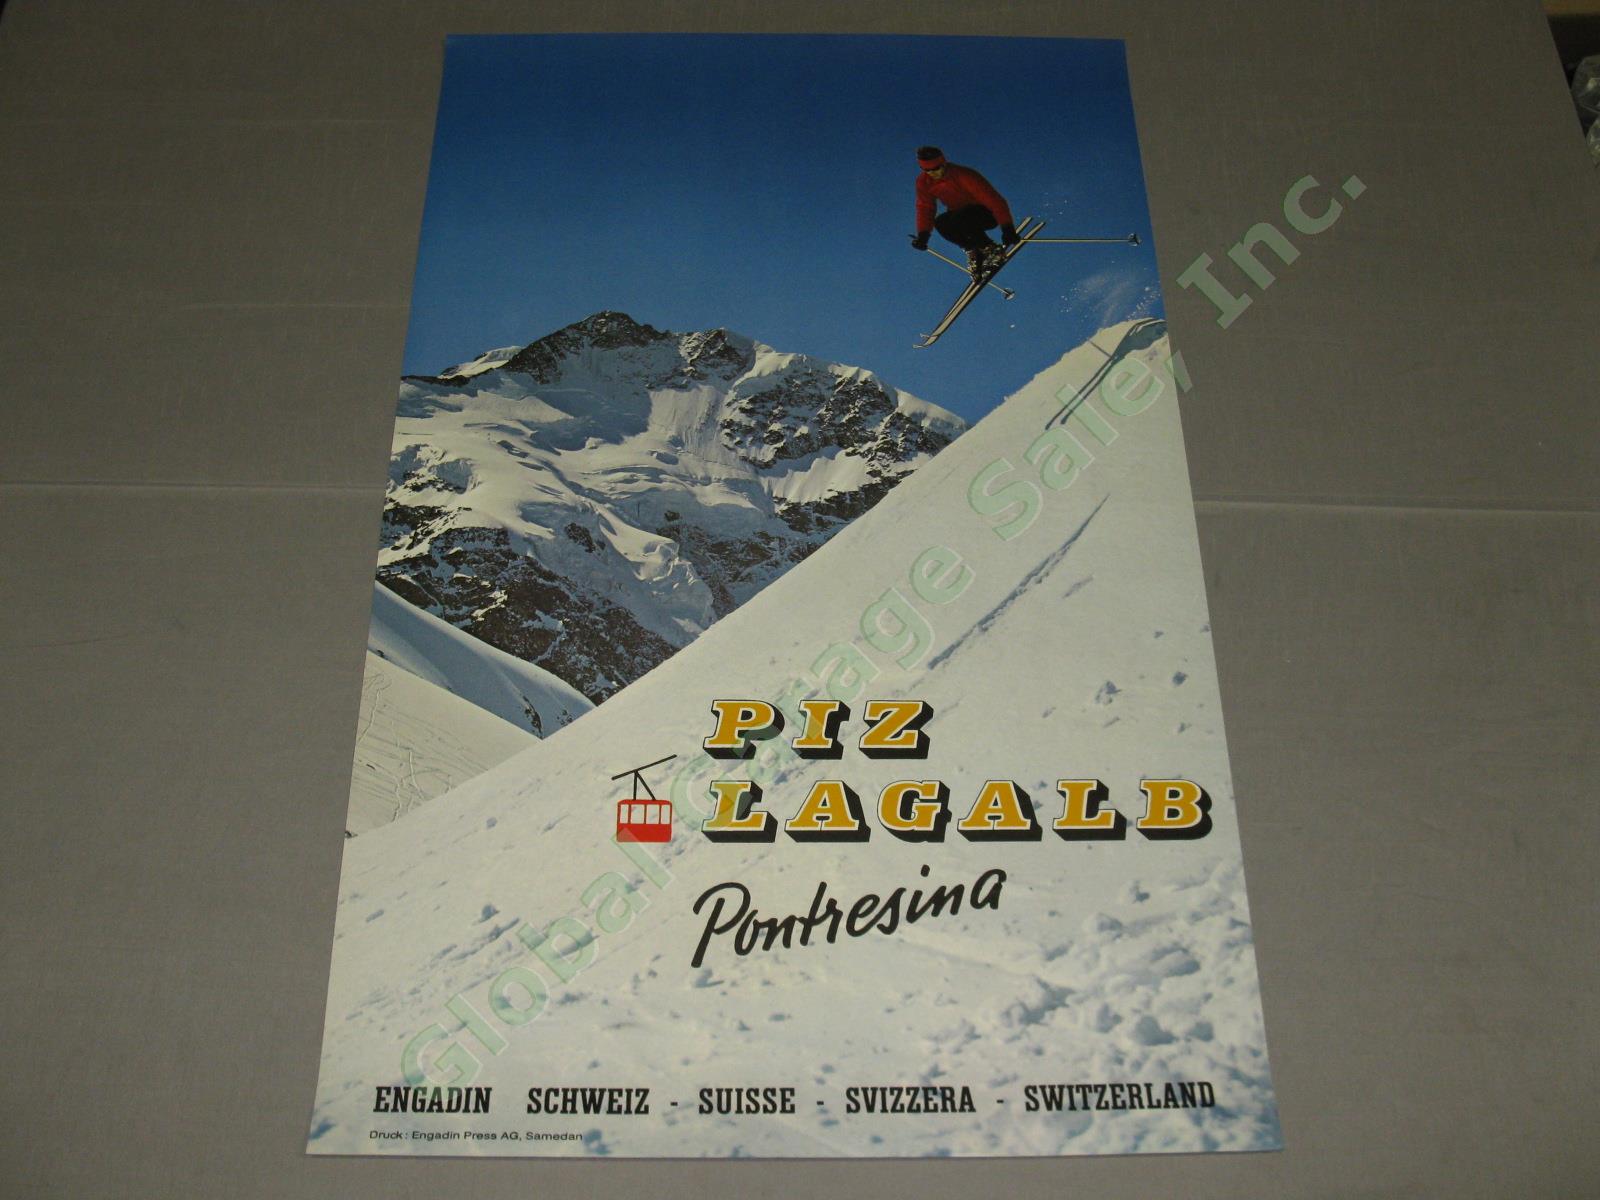 Vtg Orig 1968 Swiss Ski Travel Poster Pontresina Piz Lagalb Engadin Switzerland